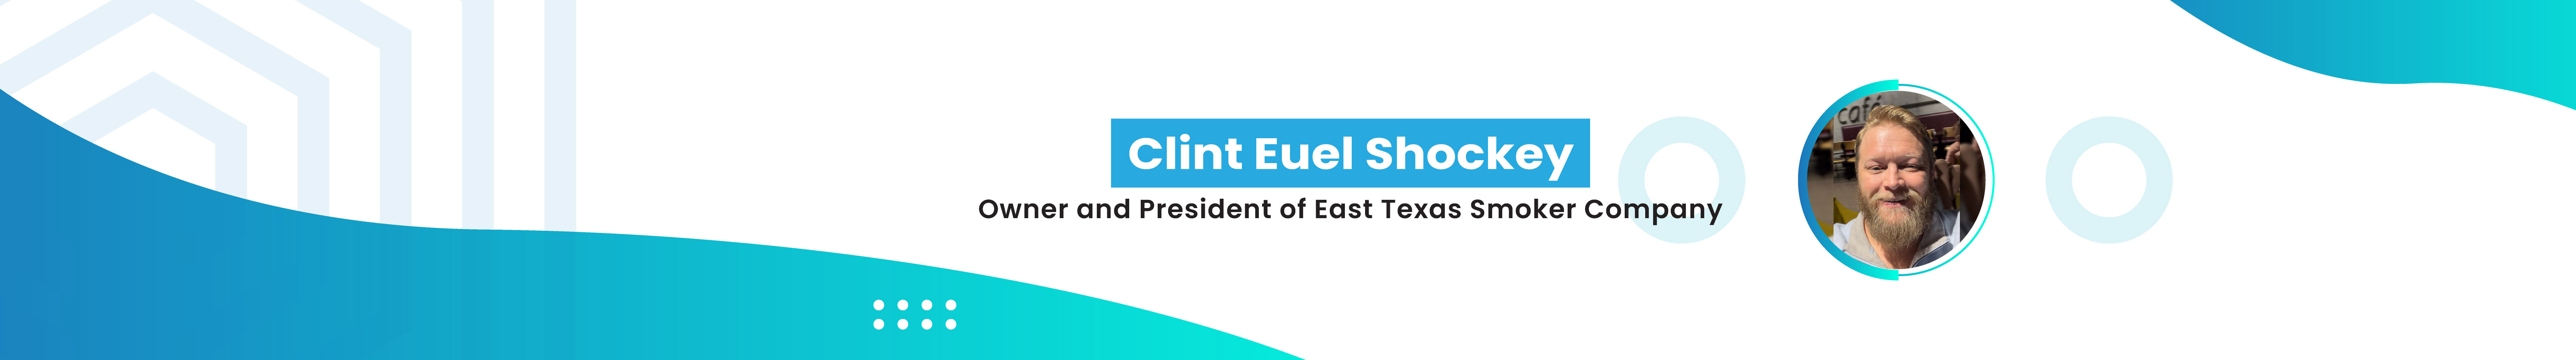 Clint Euel Shockey's profile banner